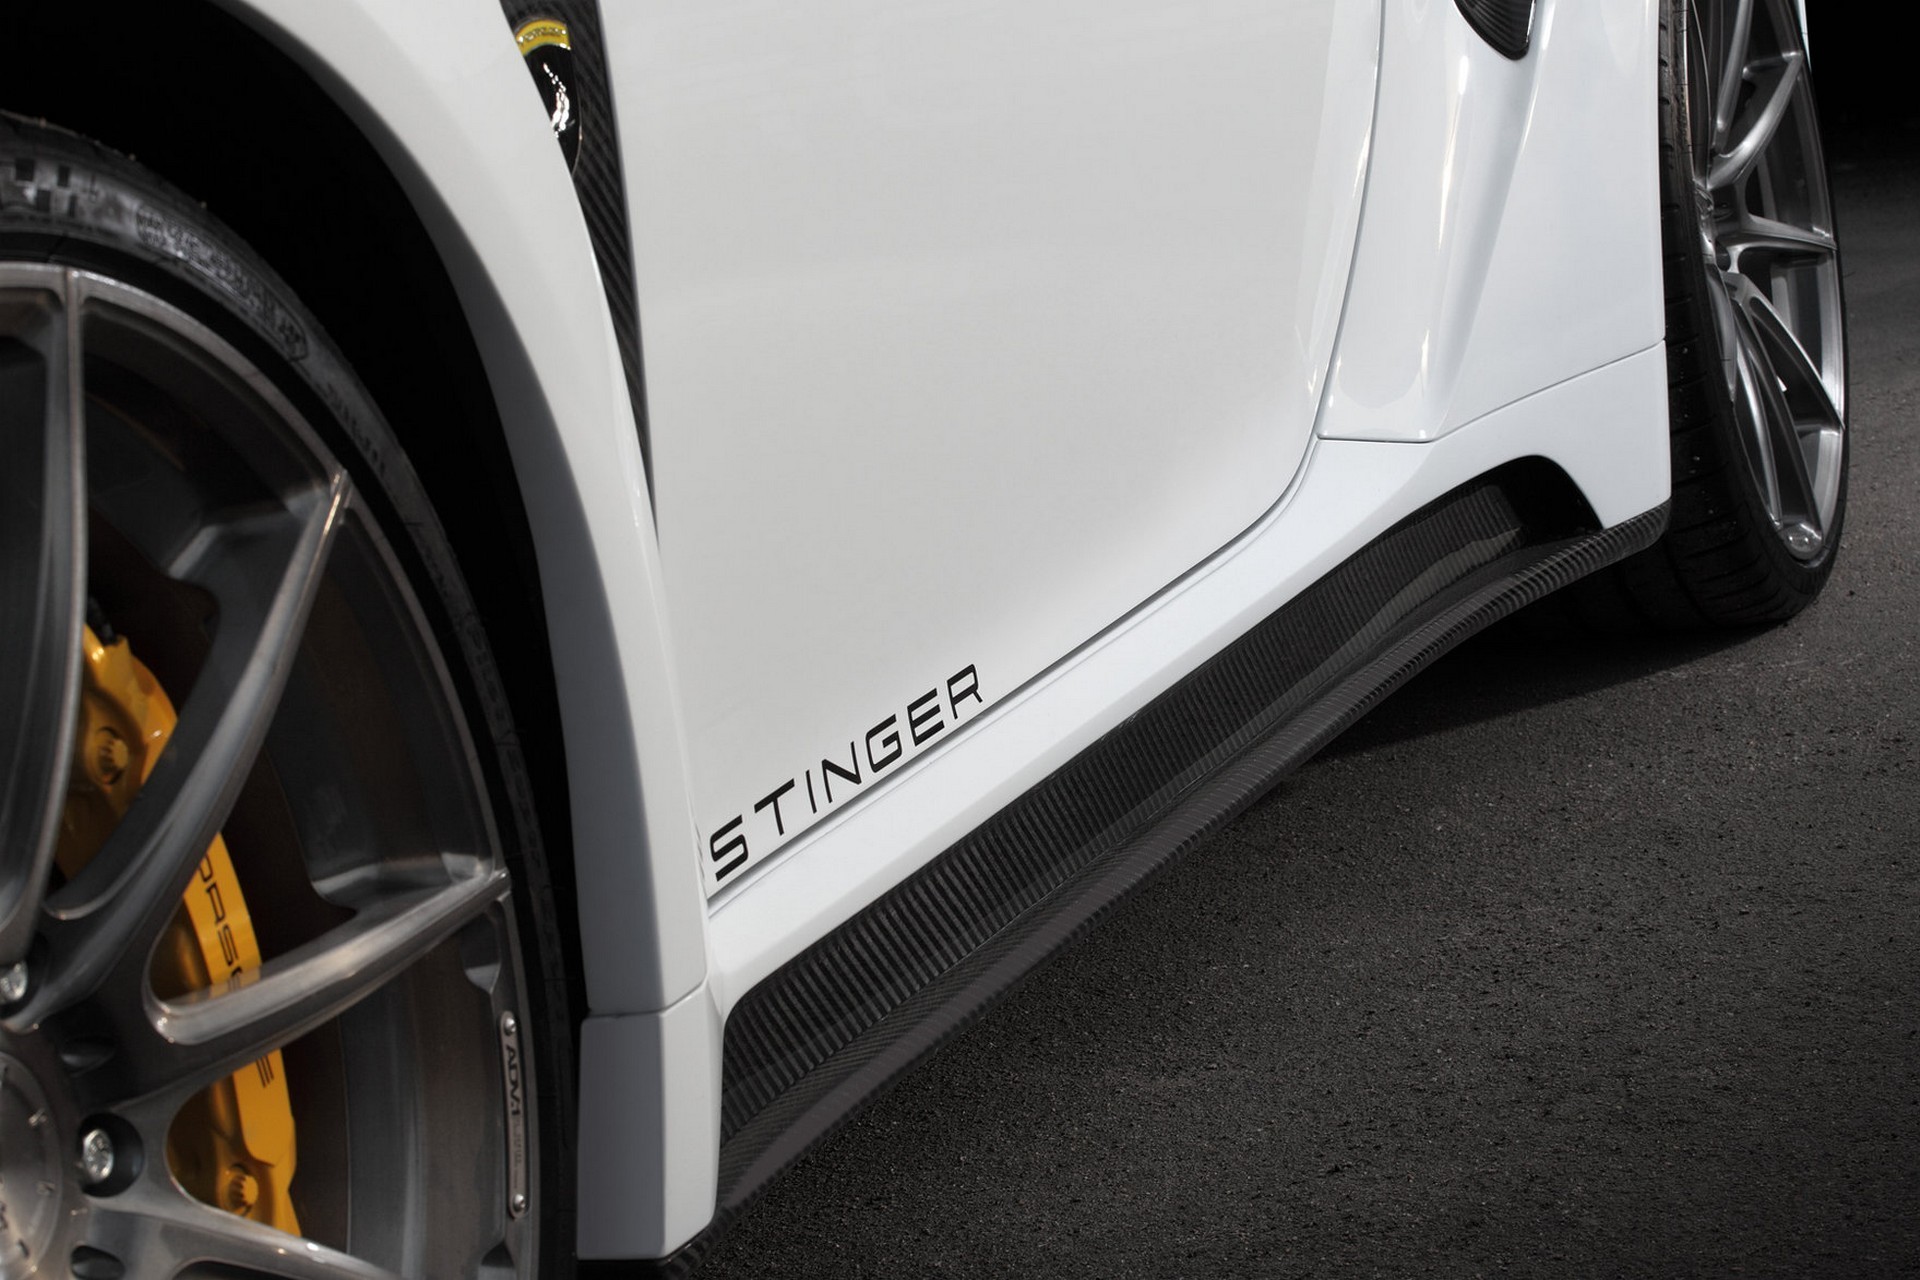 Check our price and buy Topcar Design body kit for Porsche 911 991 Stinger GTR